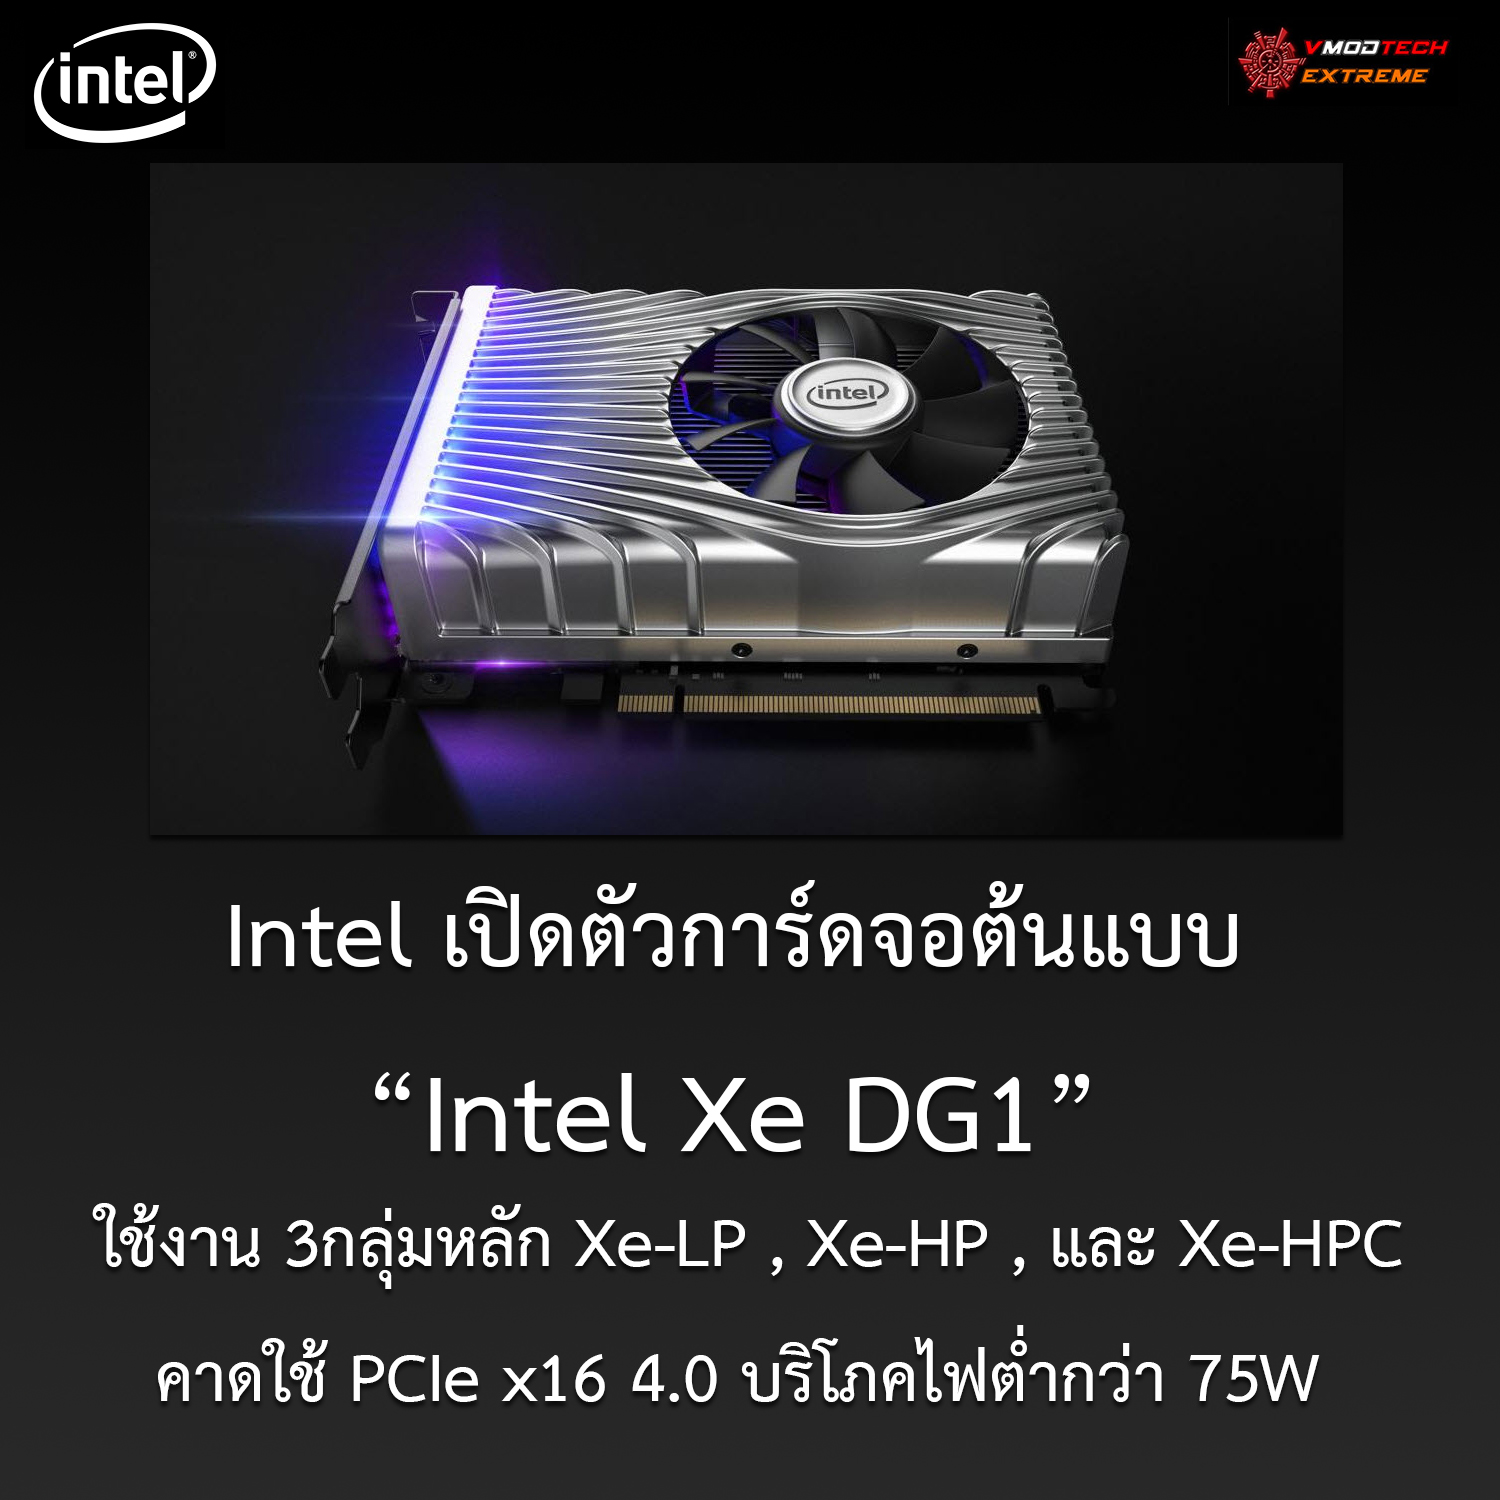 Intel เปิดตัวการ์ดจอต้นแบบ Intel Xe DG1 ที่ออกแบบให้ใช้งาน 3กลุ่มหลัก Xe-LP , Xe-HP , และ Xe-HPC 